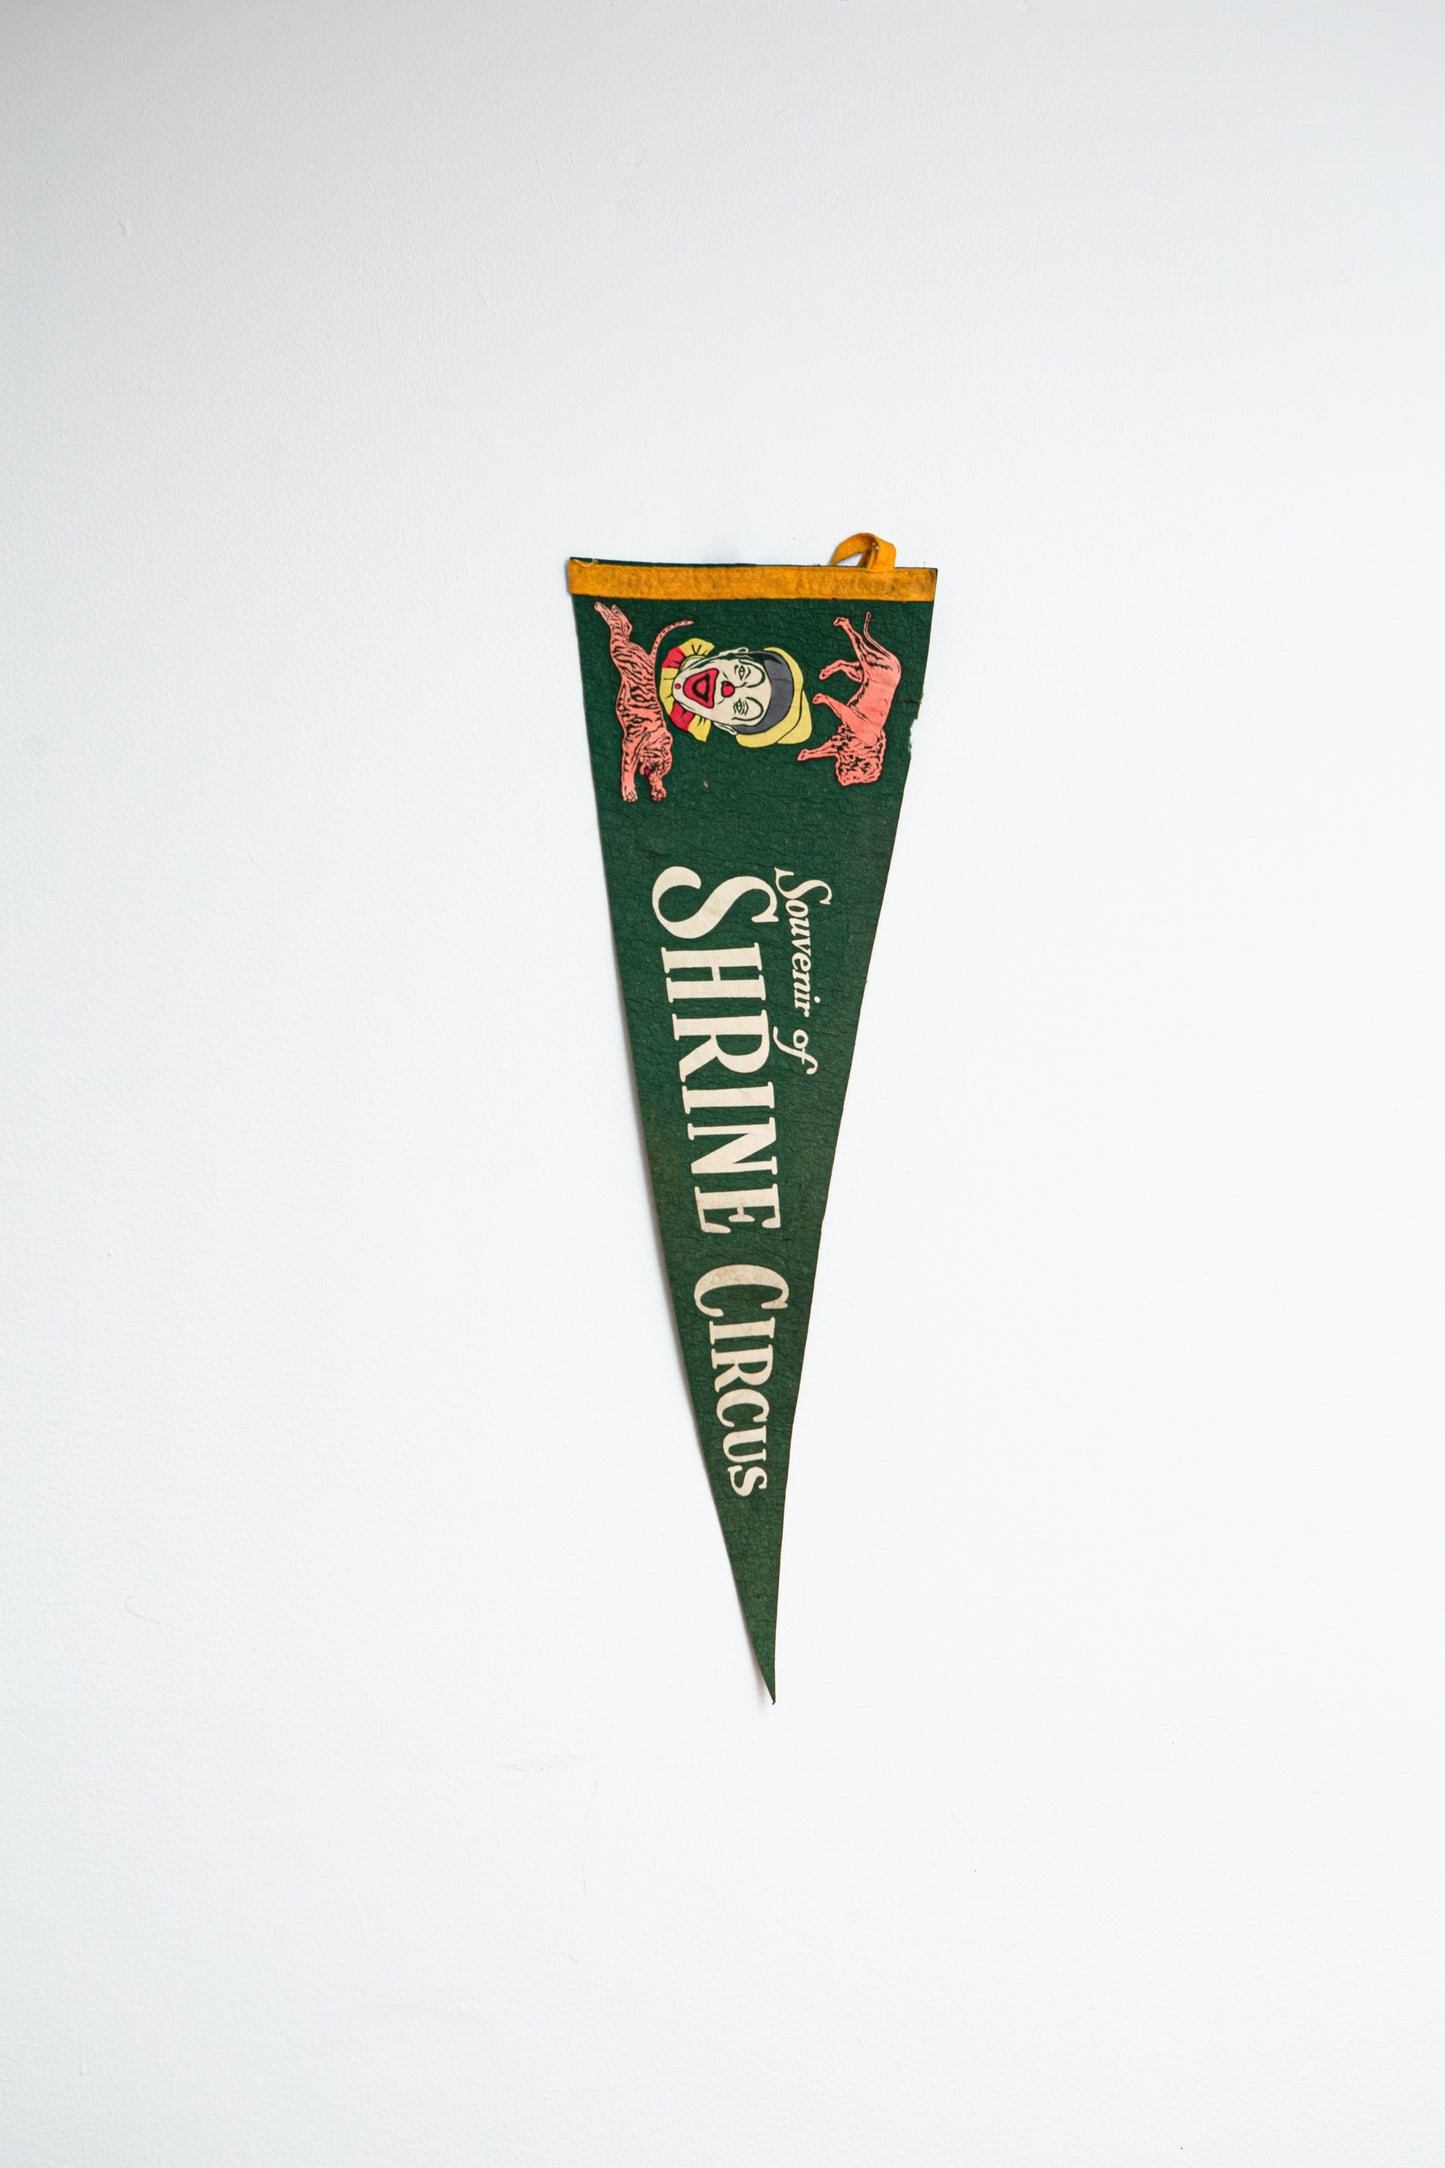 Vintage Souvenir of the Shine Circus pennant